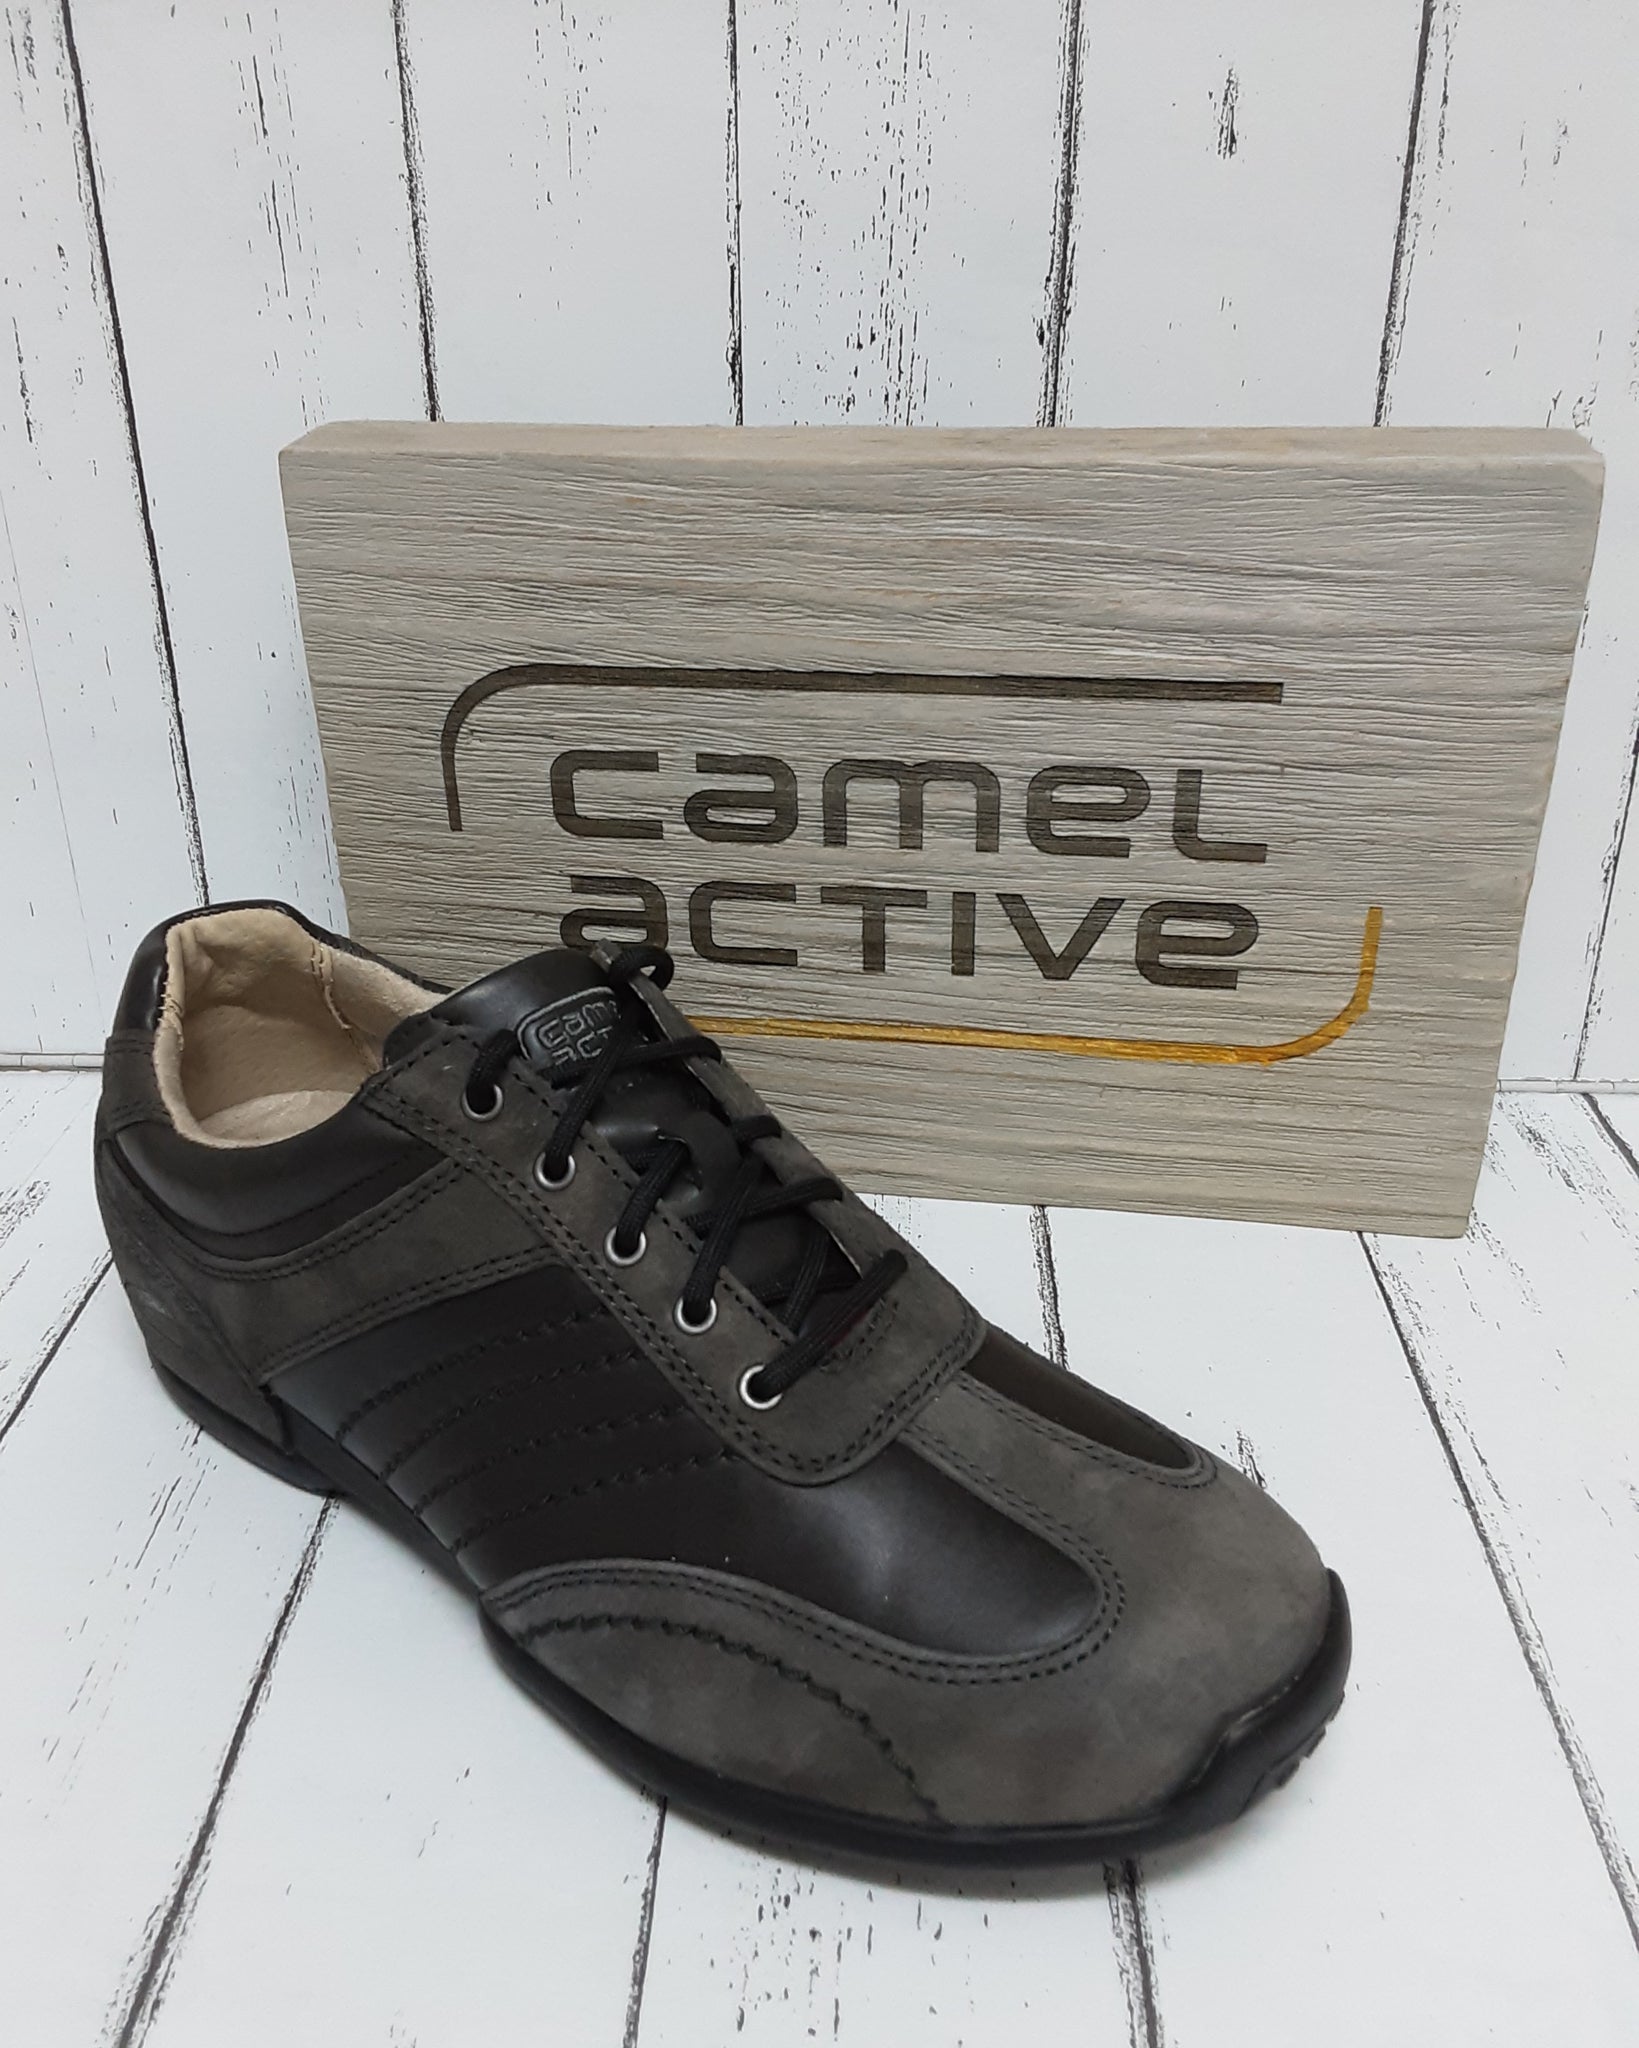 CAMEL - 137.12.08 - - Suede TRAINER Charcoal Grey – at "Christine's Shoes" Criccieth Shoe Shop